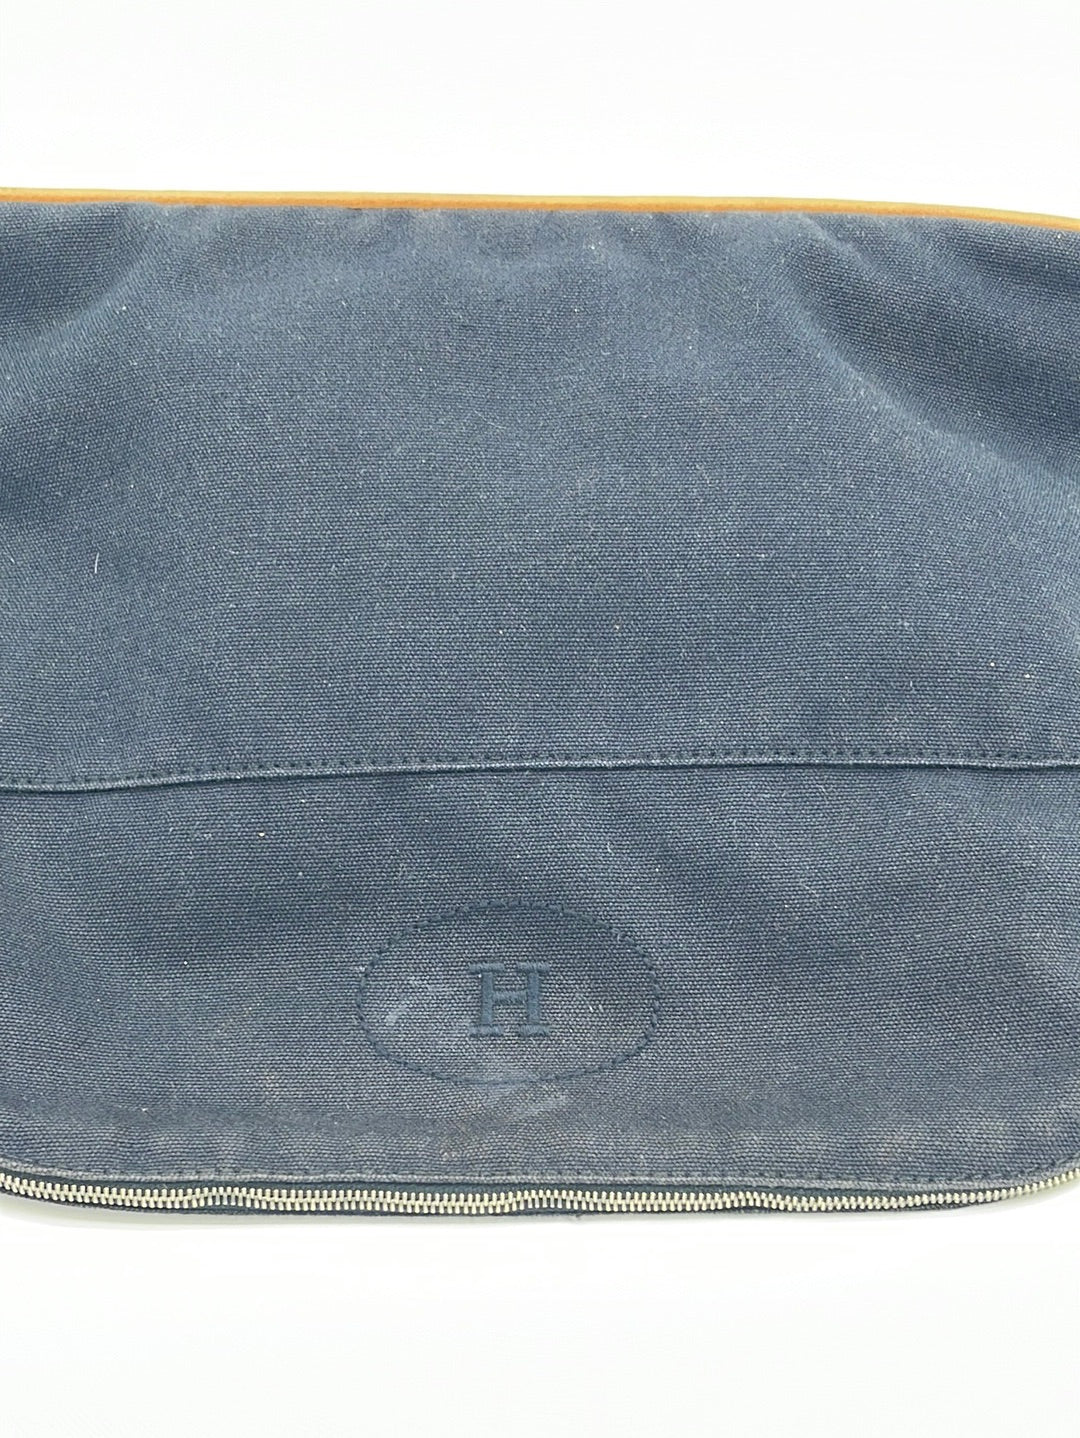 Hermes, Bags, Authentic Hermes Bolide 923 Bag Size 3 In Ocean Blue